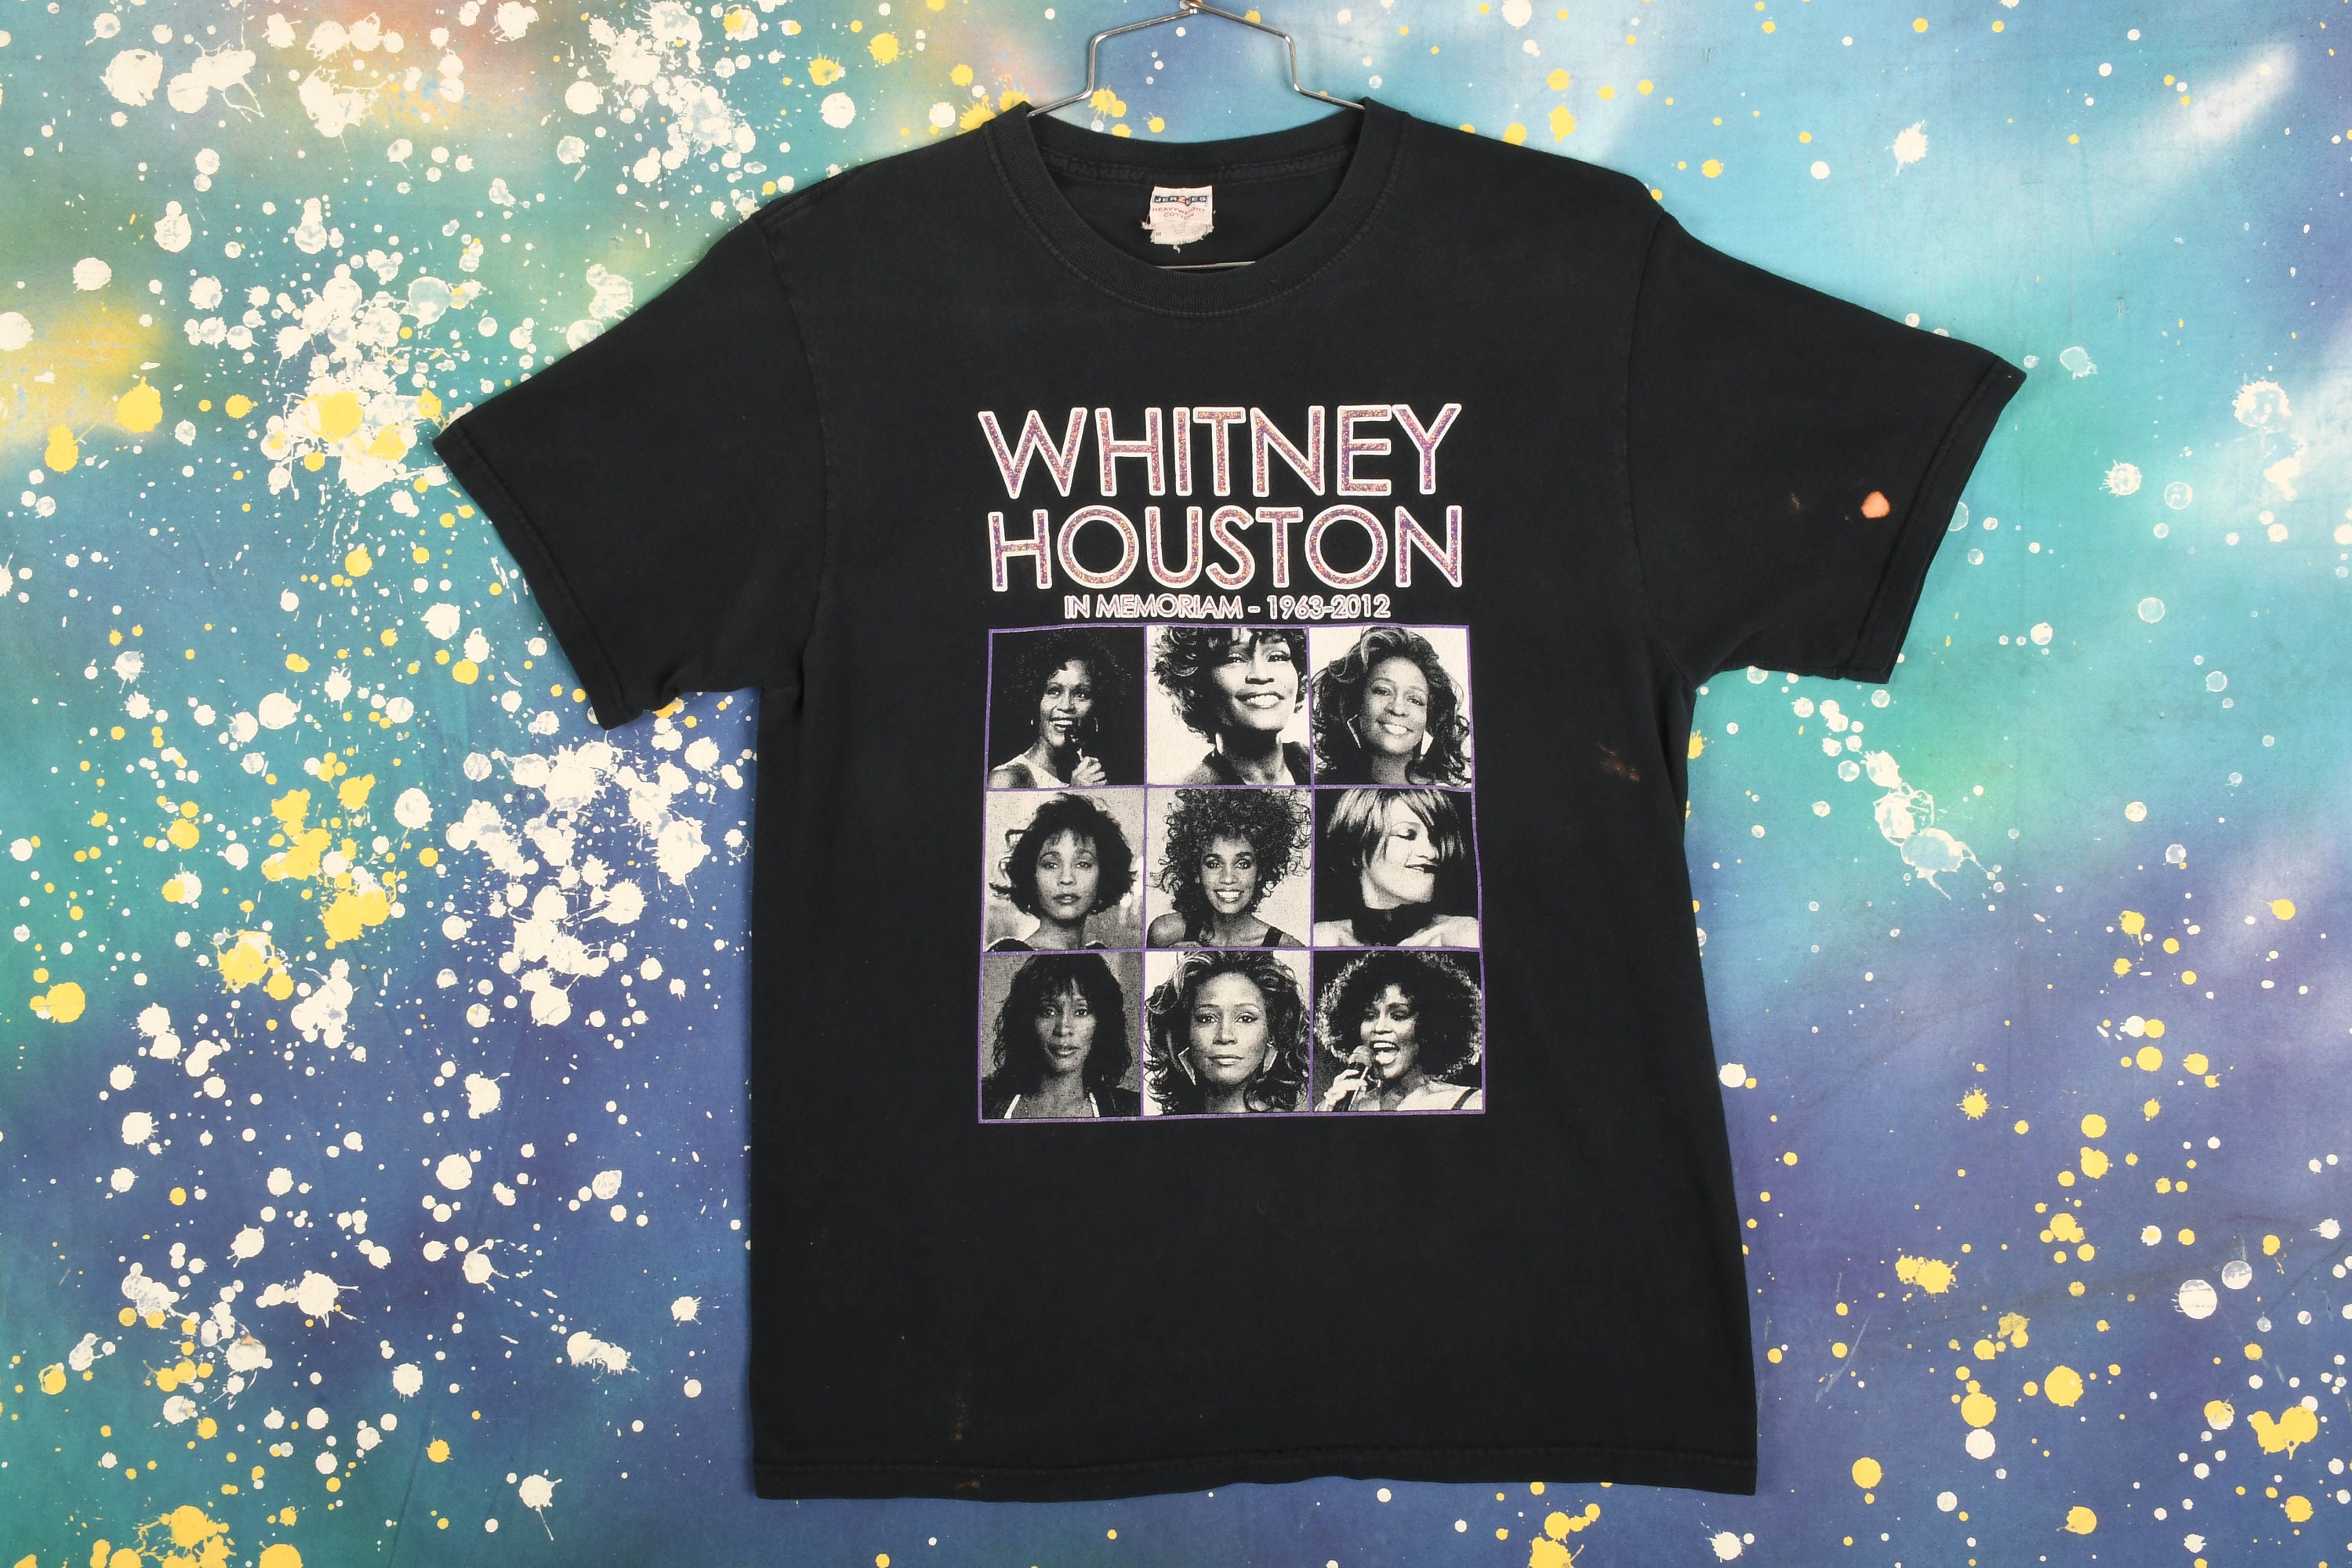 Discover WHITNEY HOUSTON In Memorial 1963-2012 T-Shirt